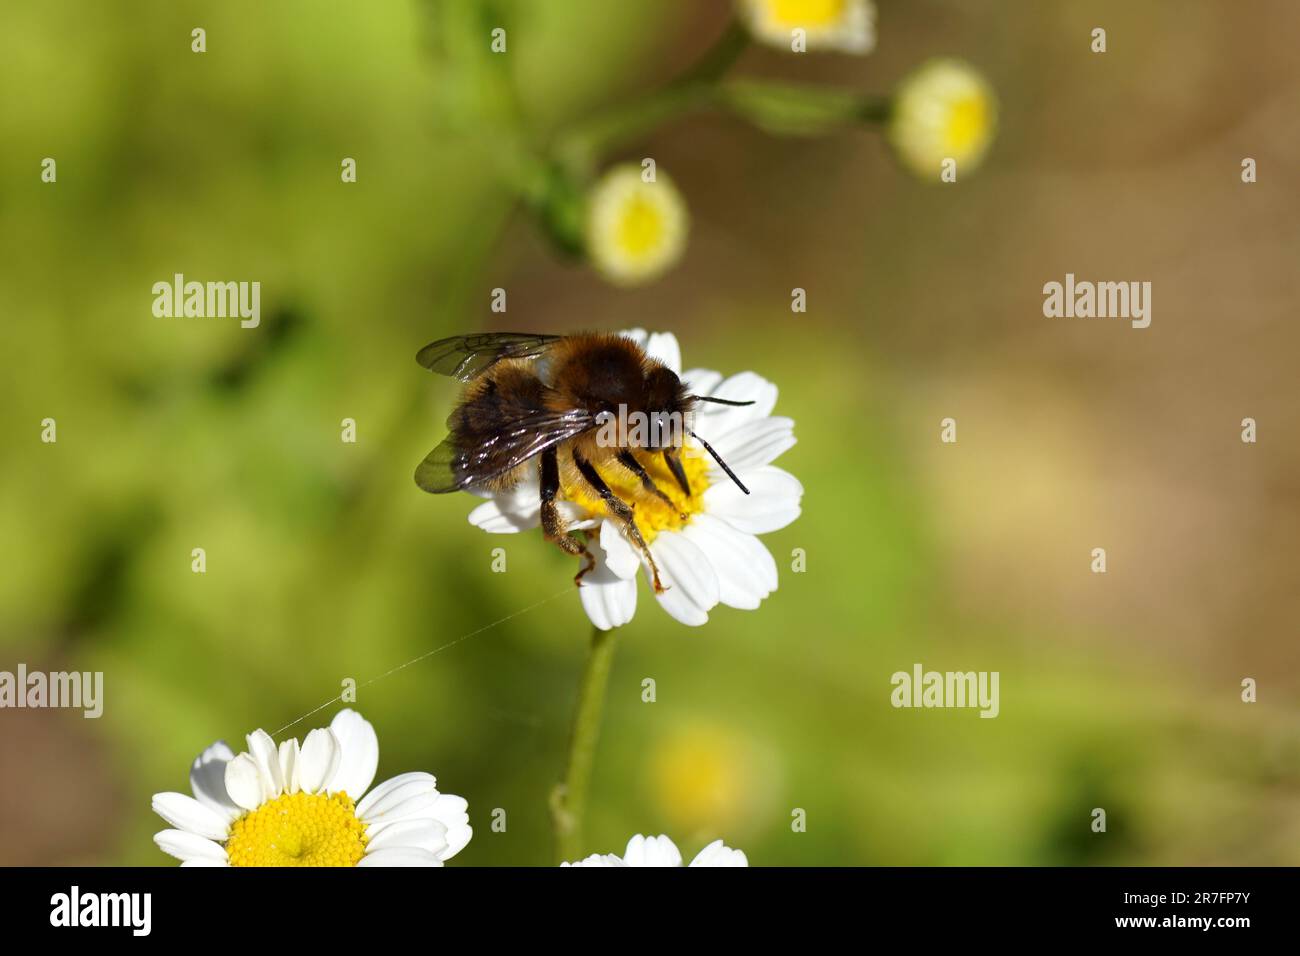 Fork-tailed Flower Bee (Anthophora furcata), family Apidae. Flowers of feverfew (Tanacetum parthenium), family Asteraceae. June, Dutch garden Stock Photo